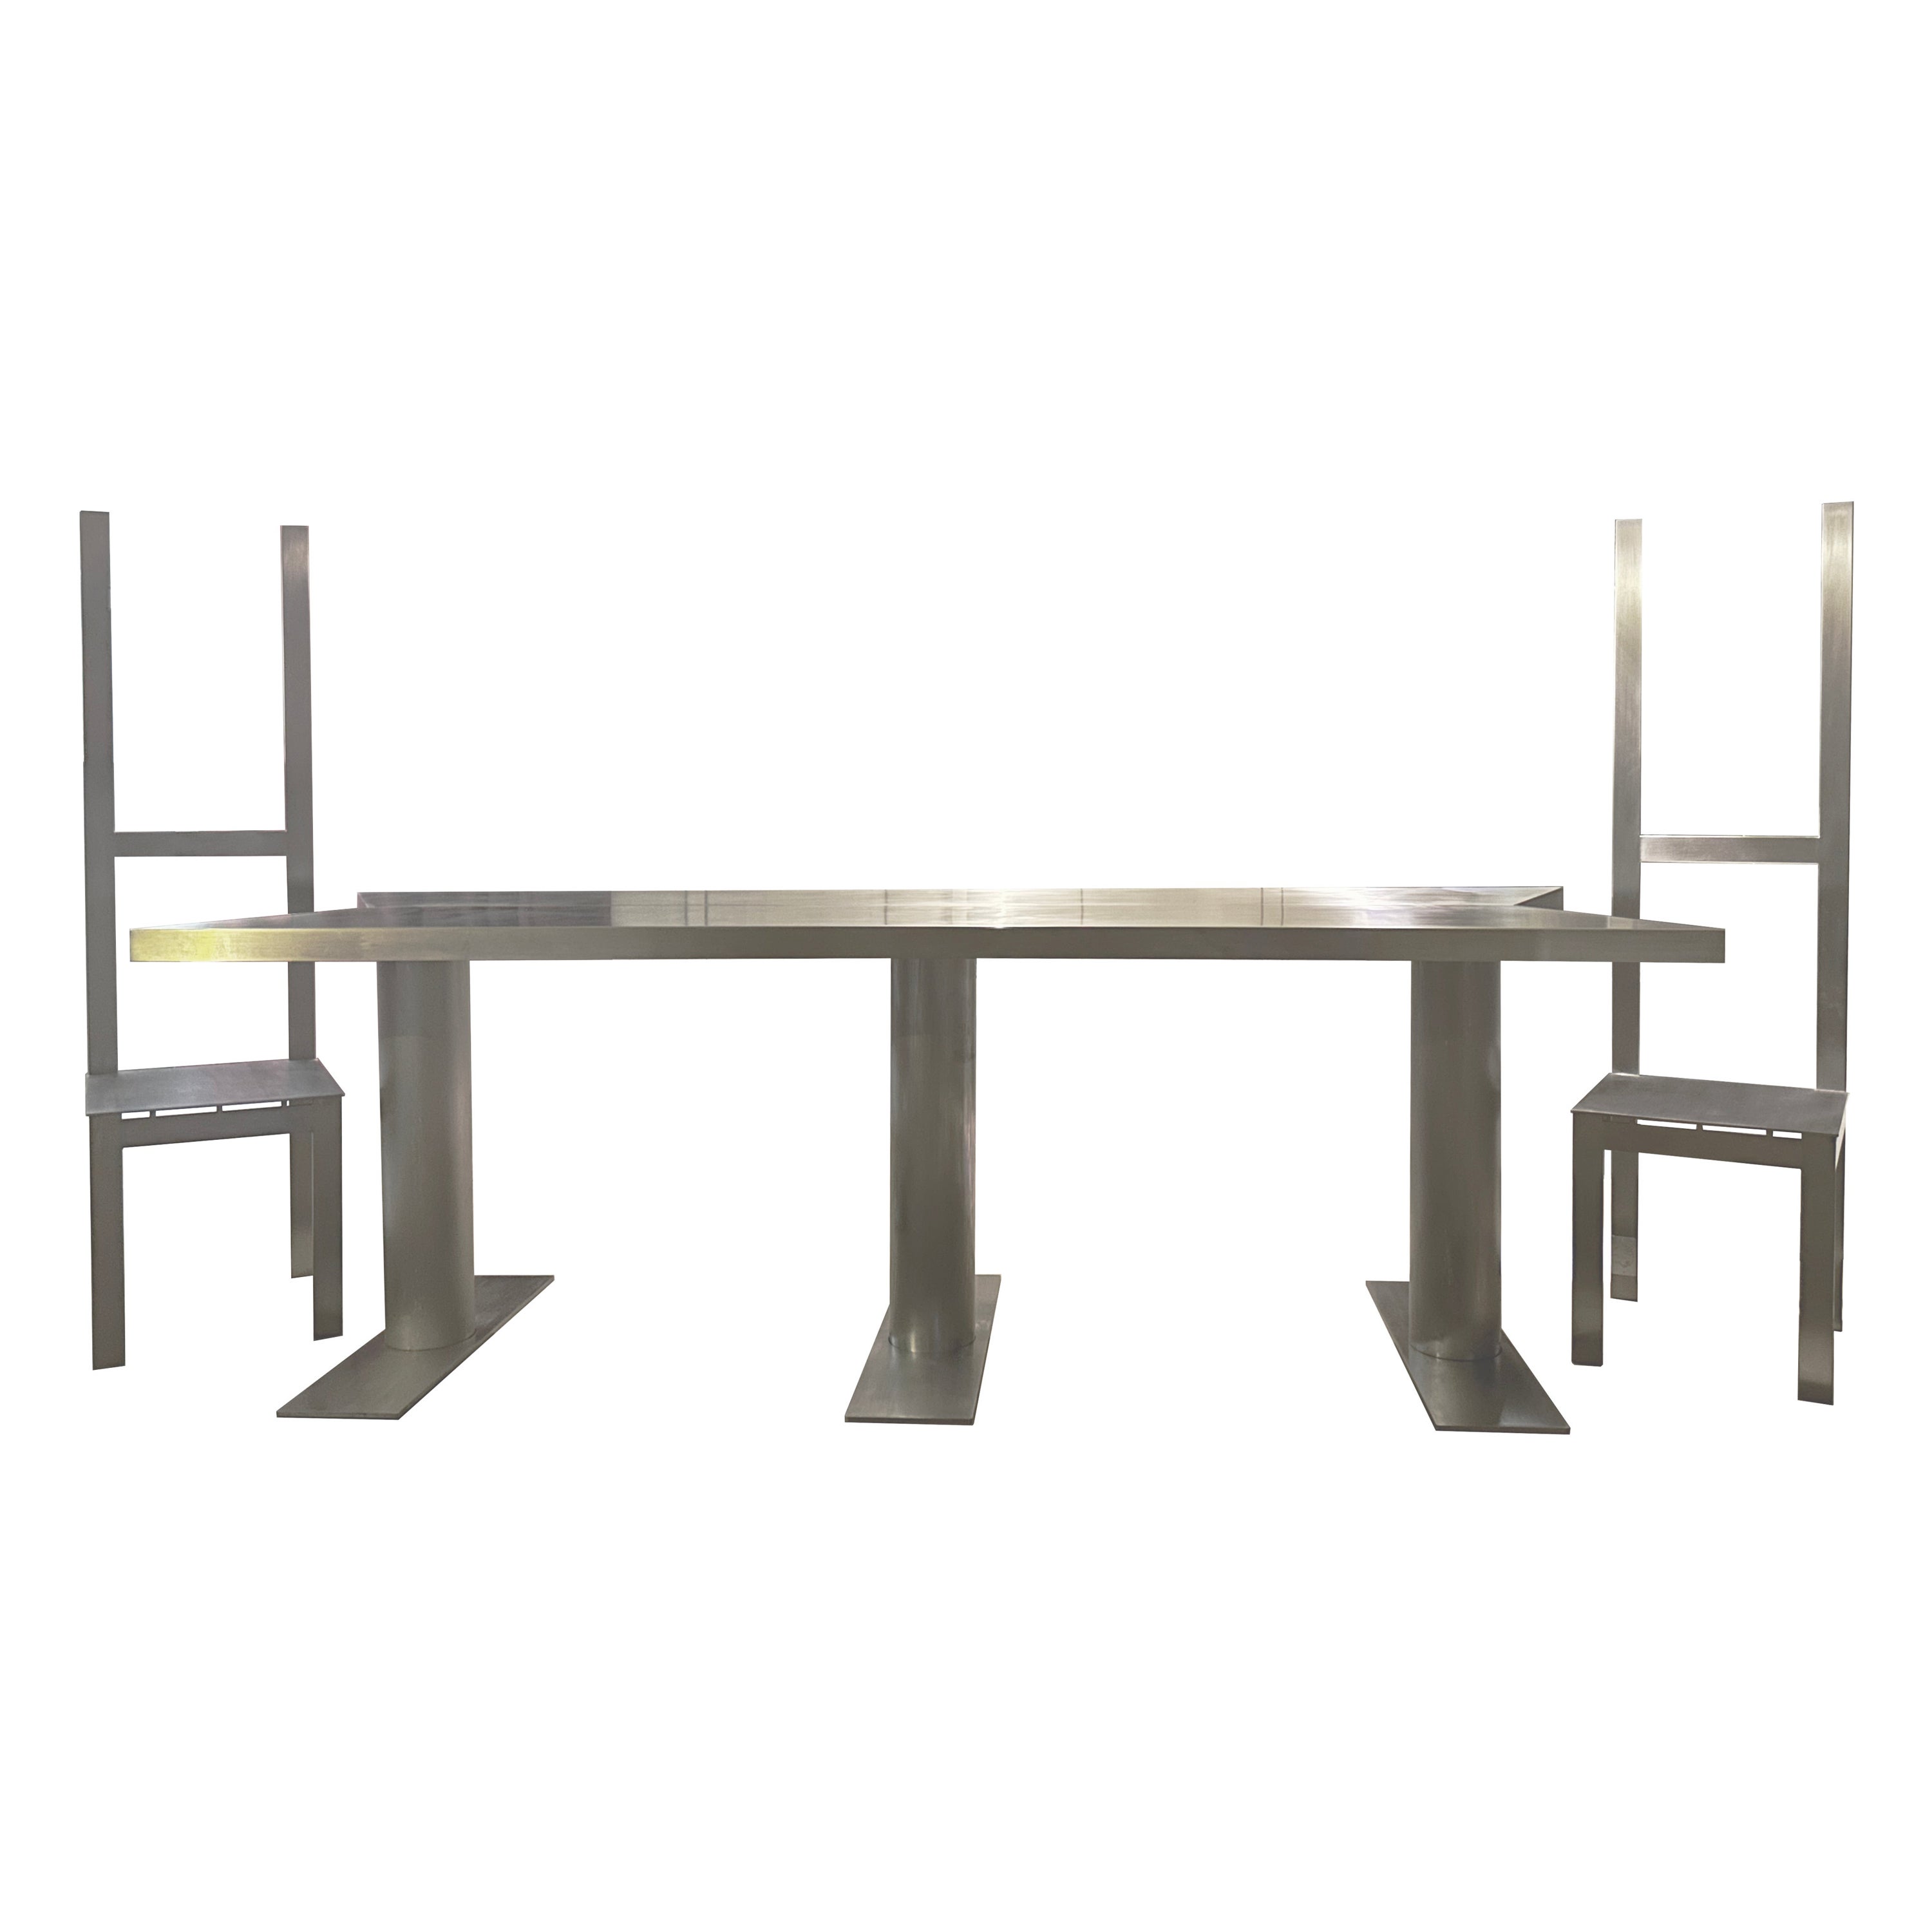 "Big Iron" Chairs / "Running Gun" Table, Iron, James Vincent Milano, Italy, 2023